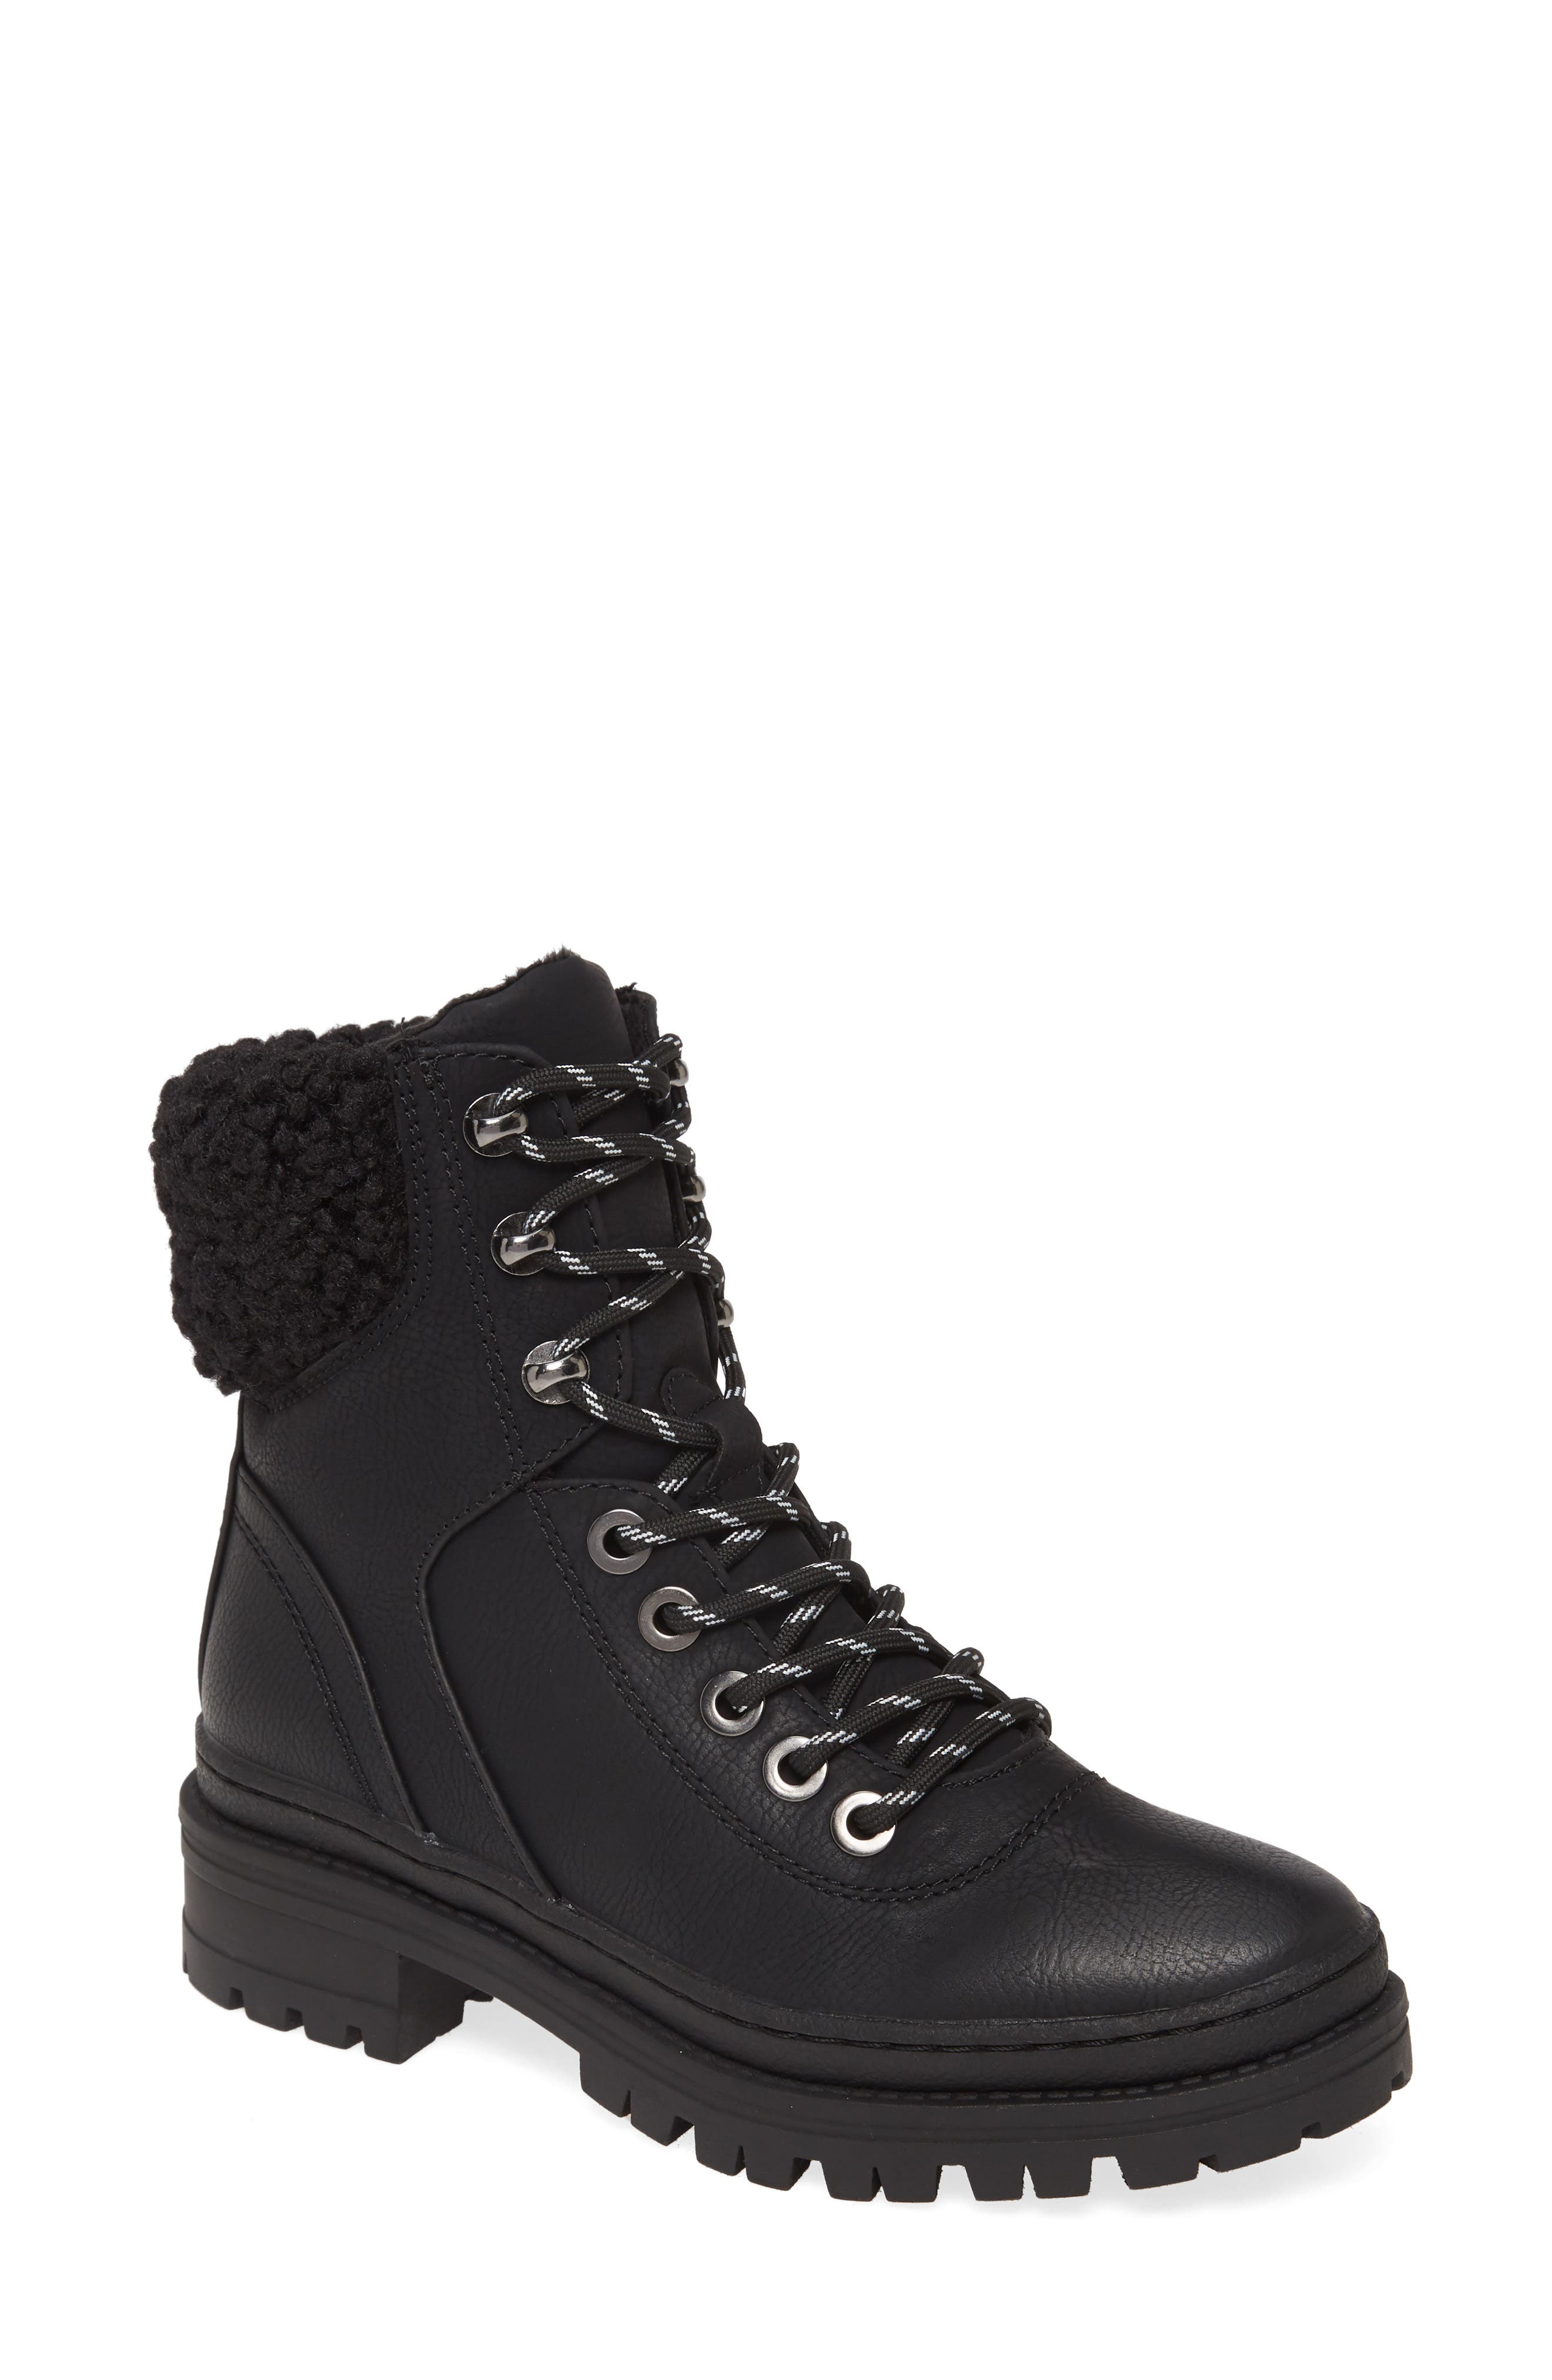 New Steve Madden Women/'s Keystone Faux Fur Trim Lace-Up Black Boot Size 7